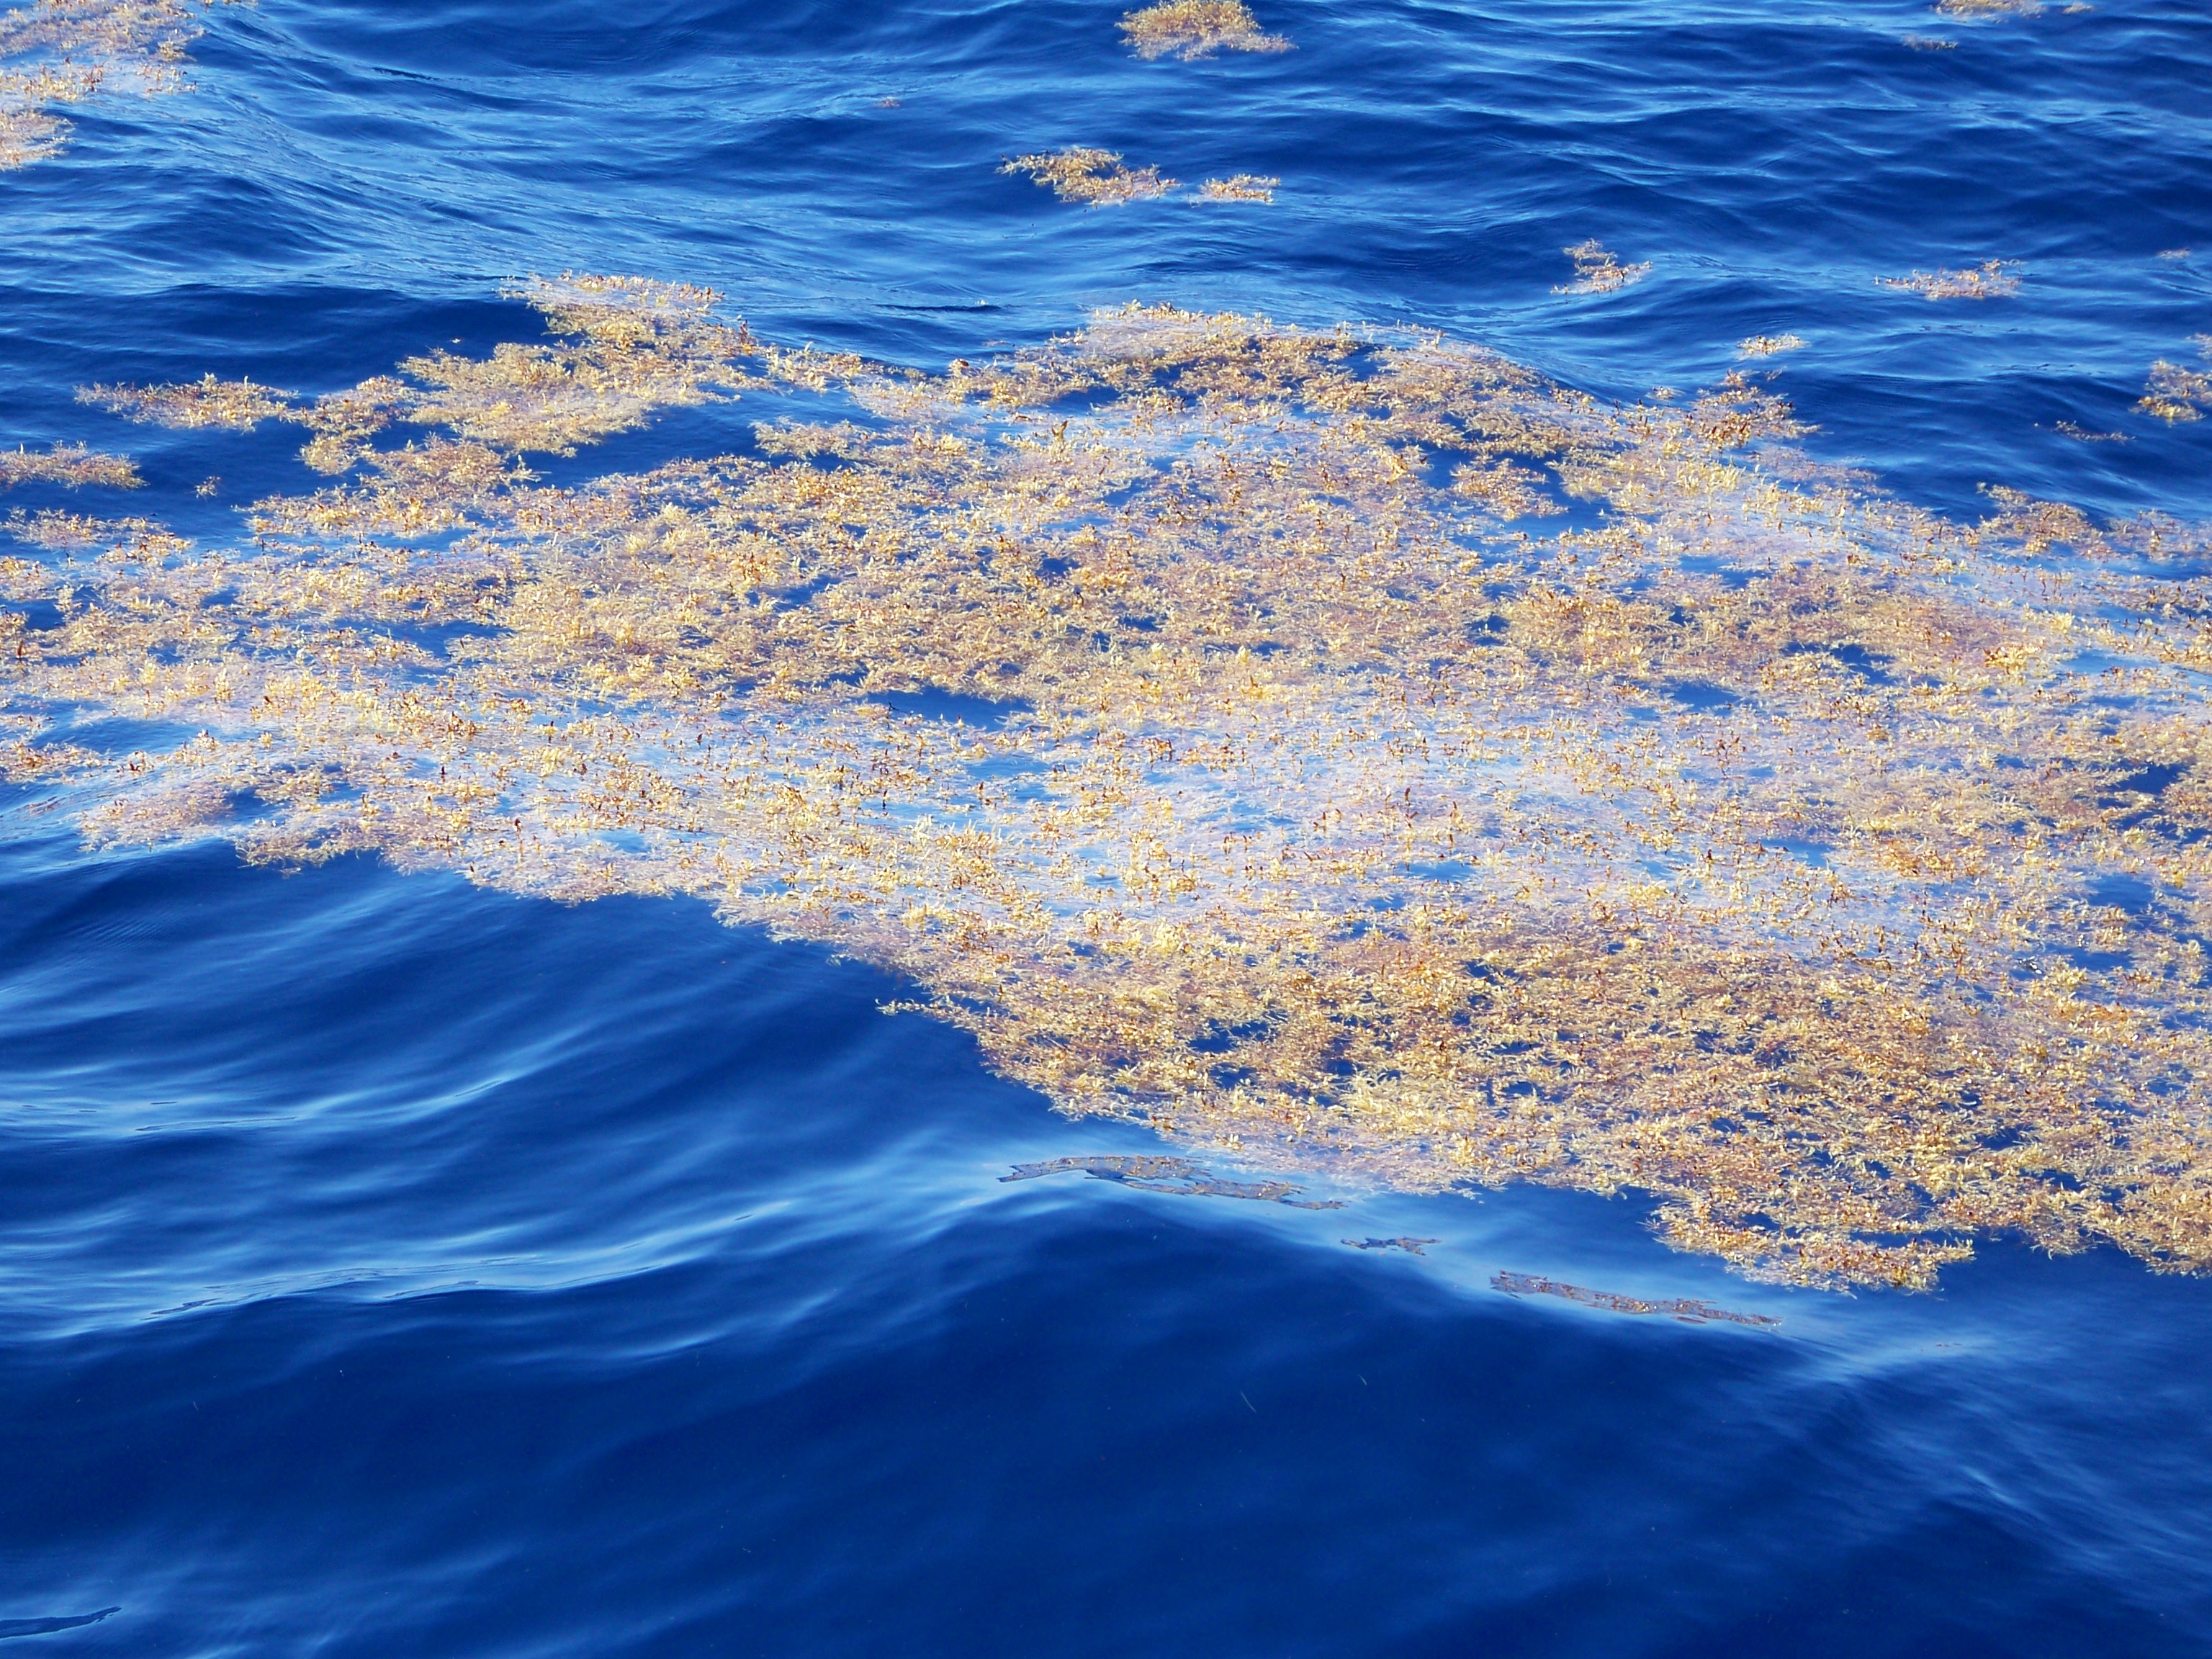 A Sargassum line can stretch for miles across the ocean surface. Image: NOAA Teacher at Sea, Carol Schnaiter